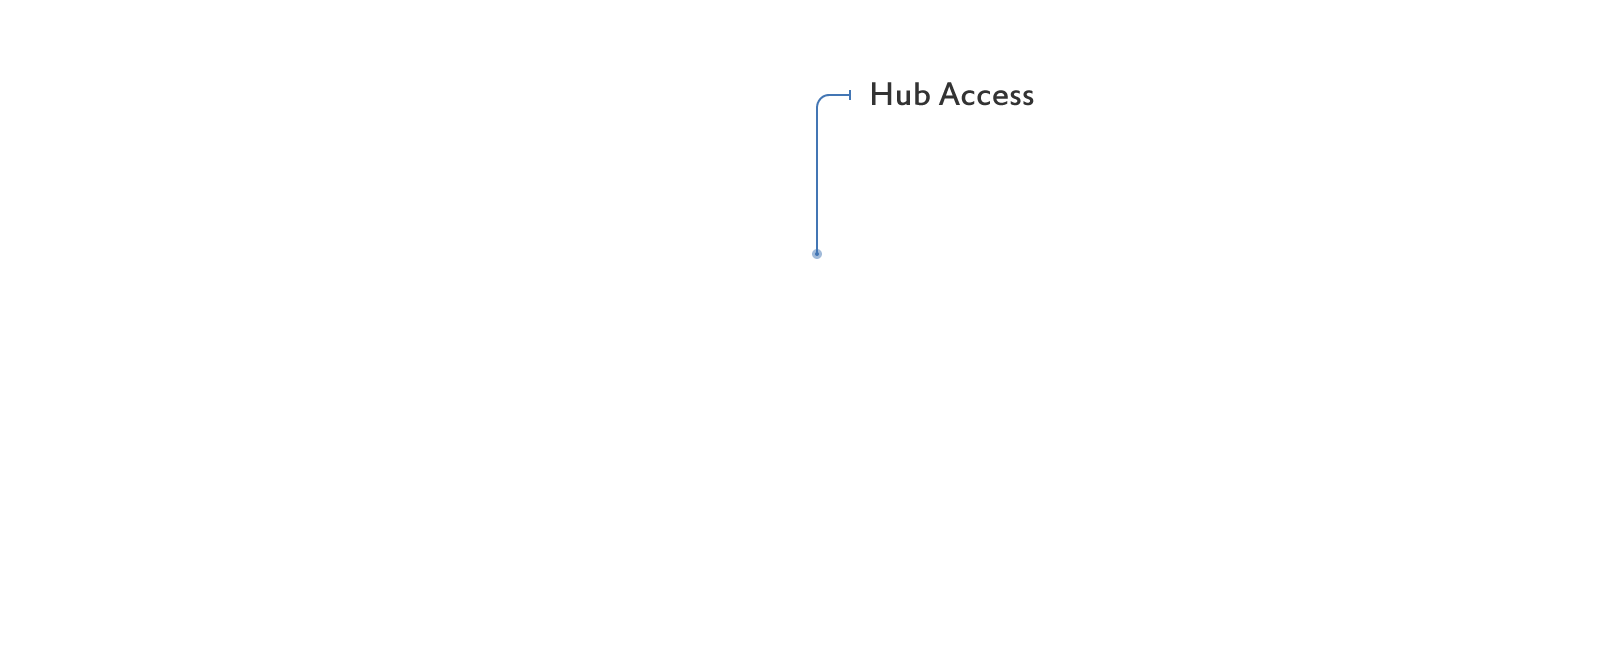 Hub Access